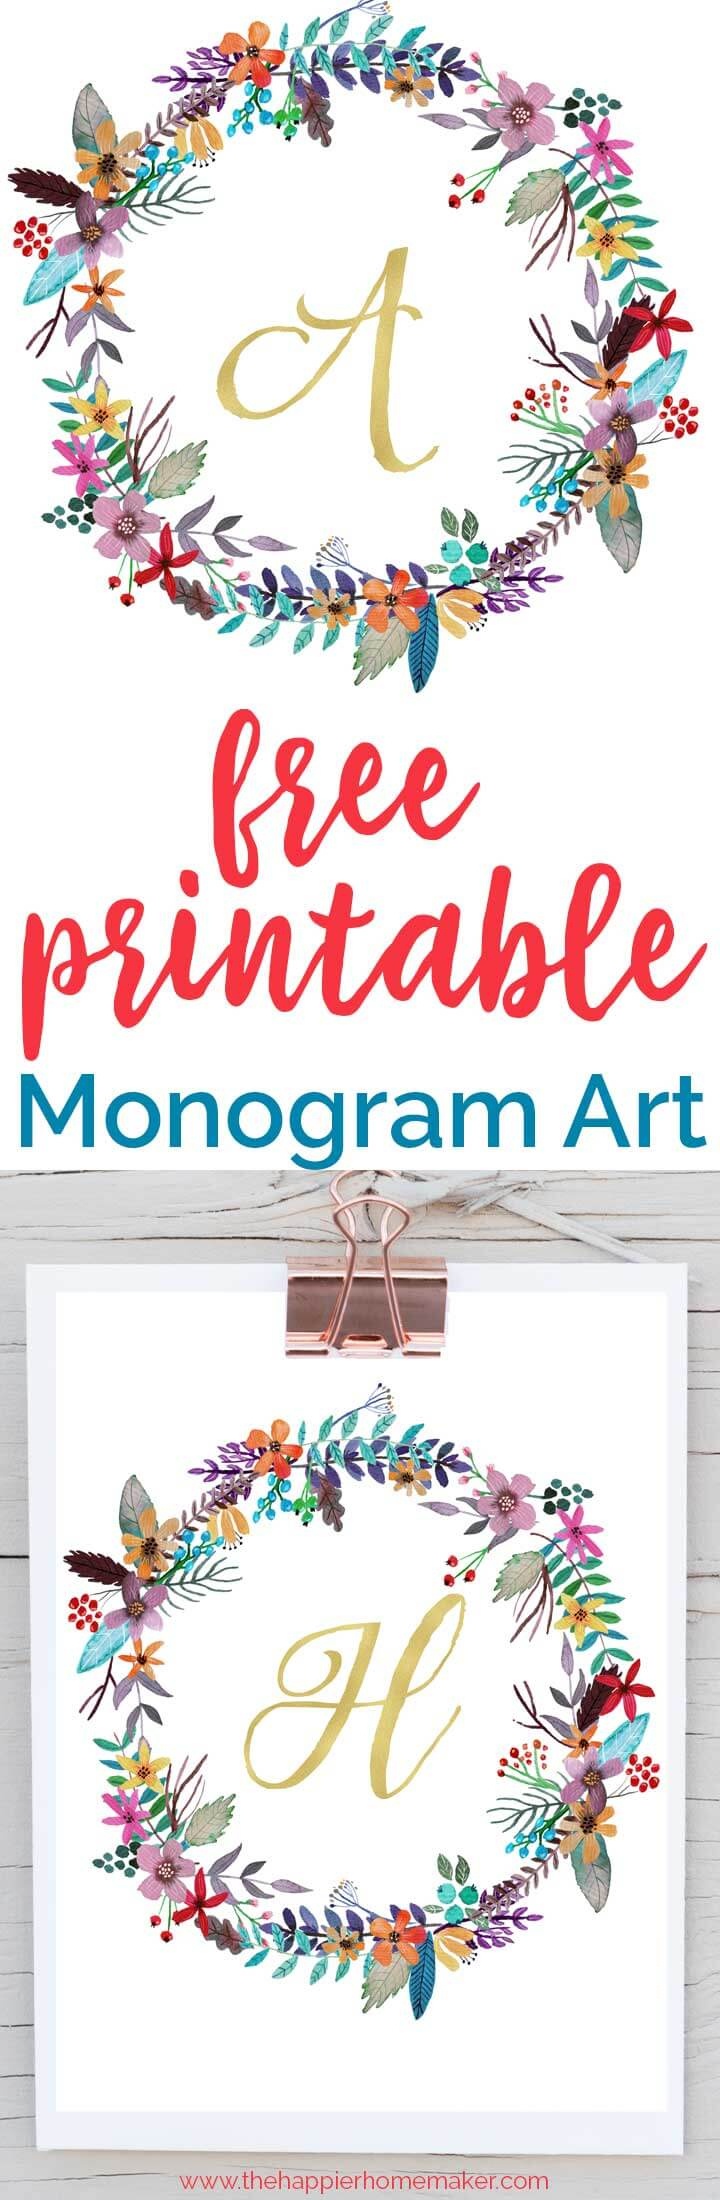 Free Printable Monogram Art | The Happier Homemaker - Free Printable Monogram